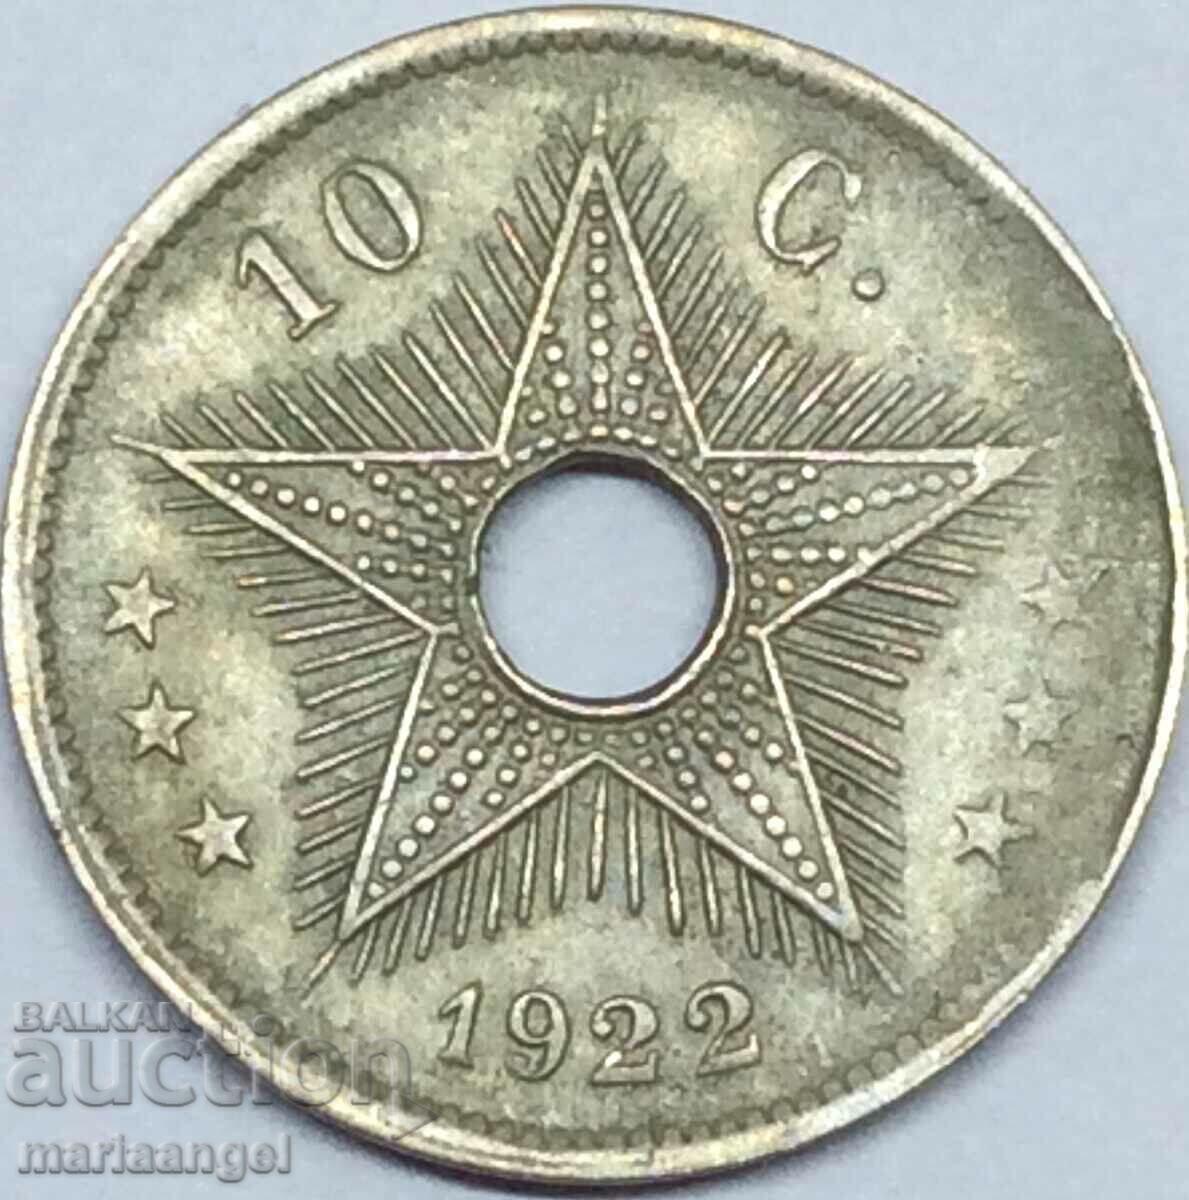 Congo Belgian 1922 10 centimes